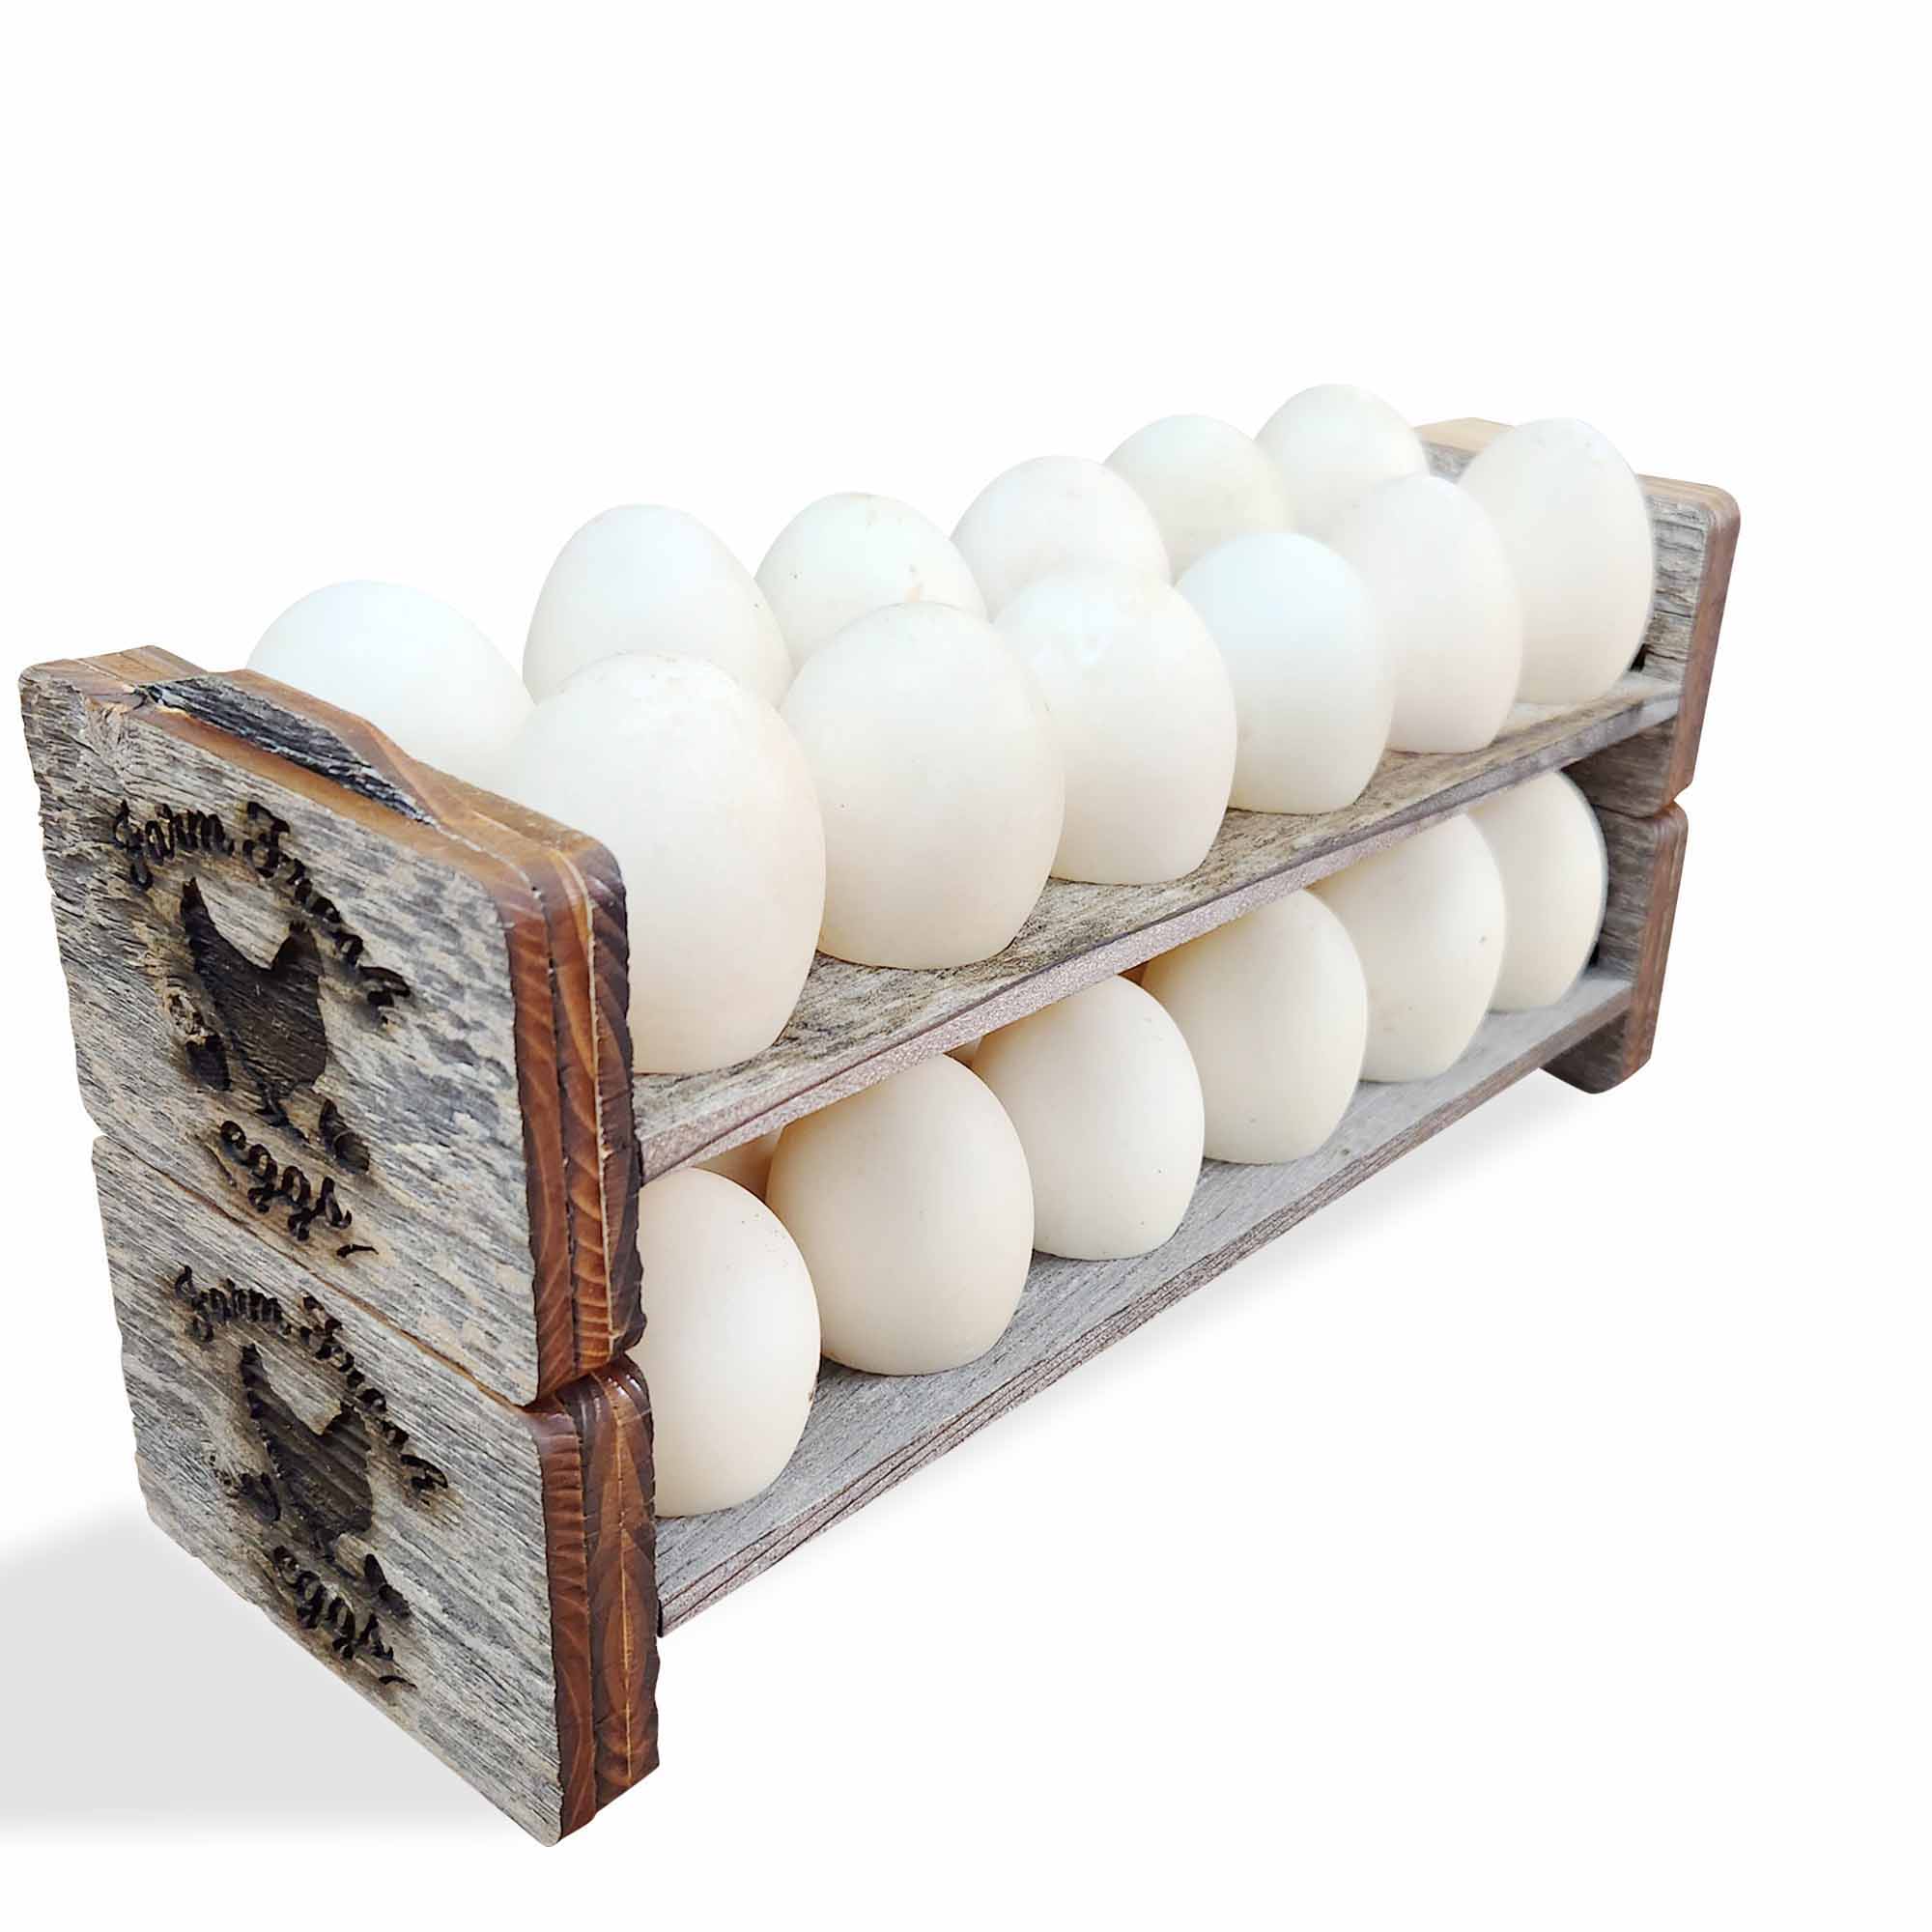 Wood Egg Holder Countertop Egg Tray. Farmhouse Wooden Decor Storage Tray. 